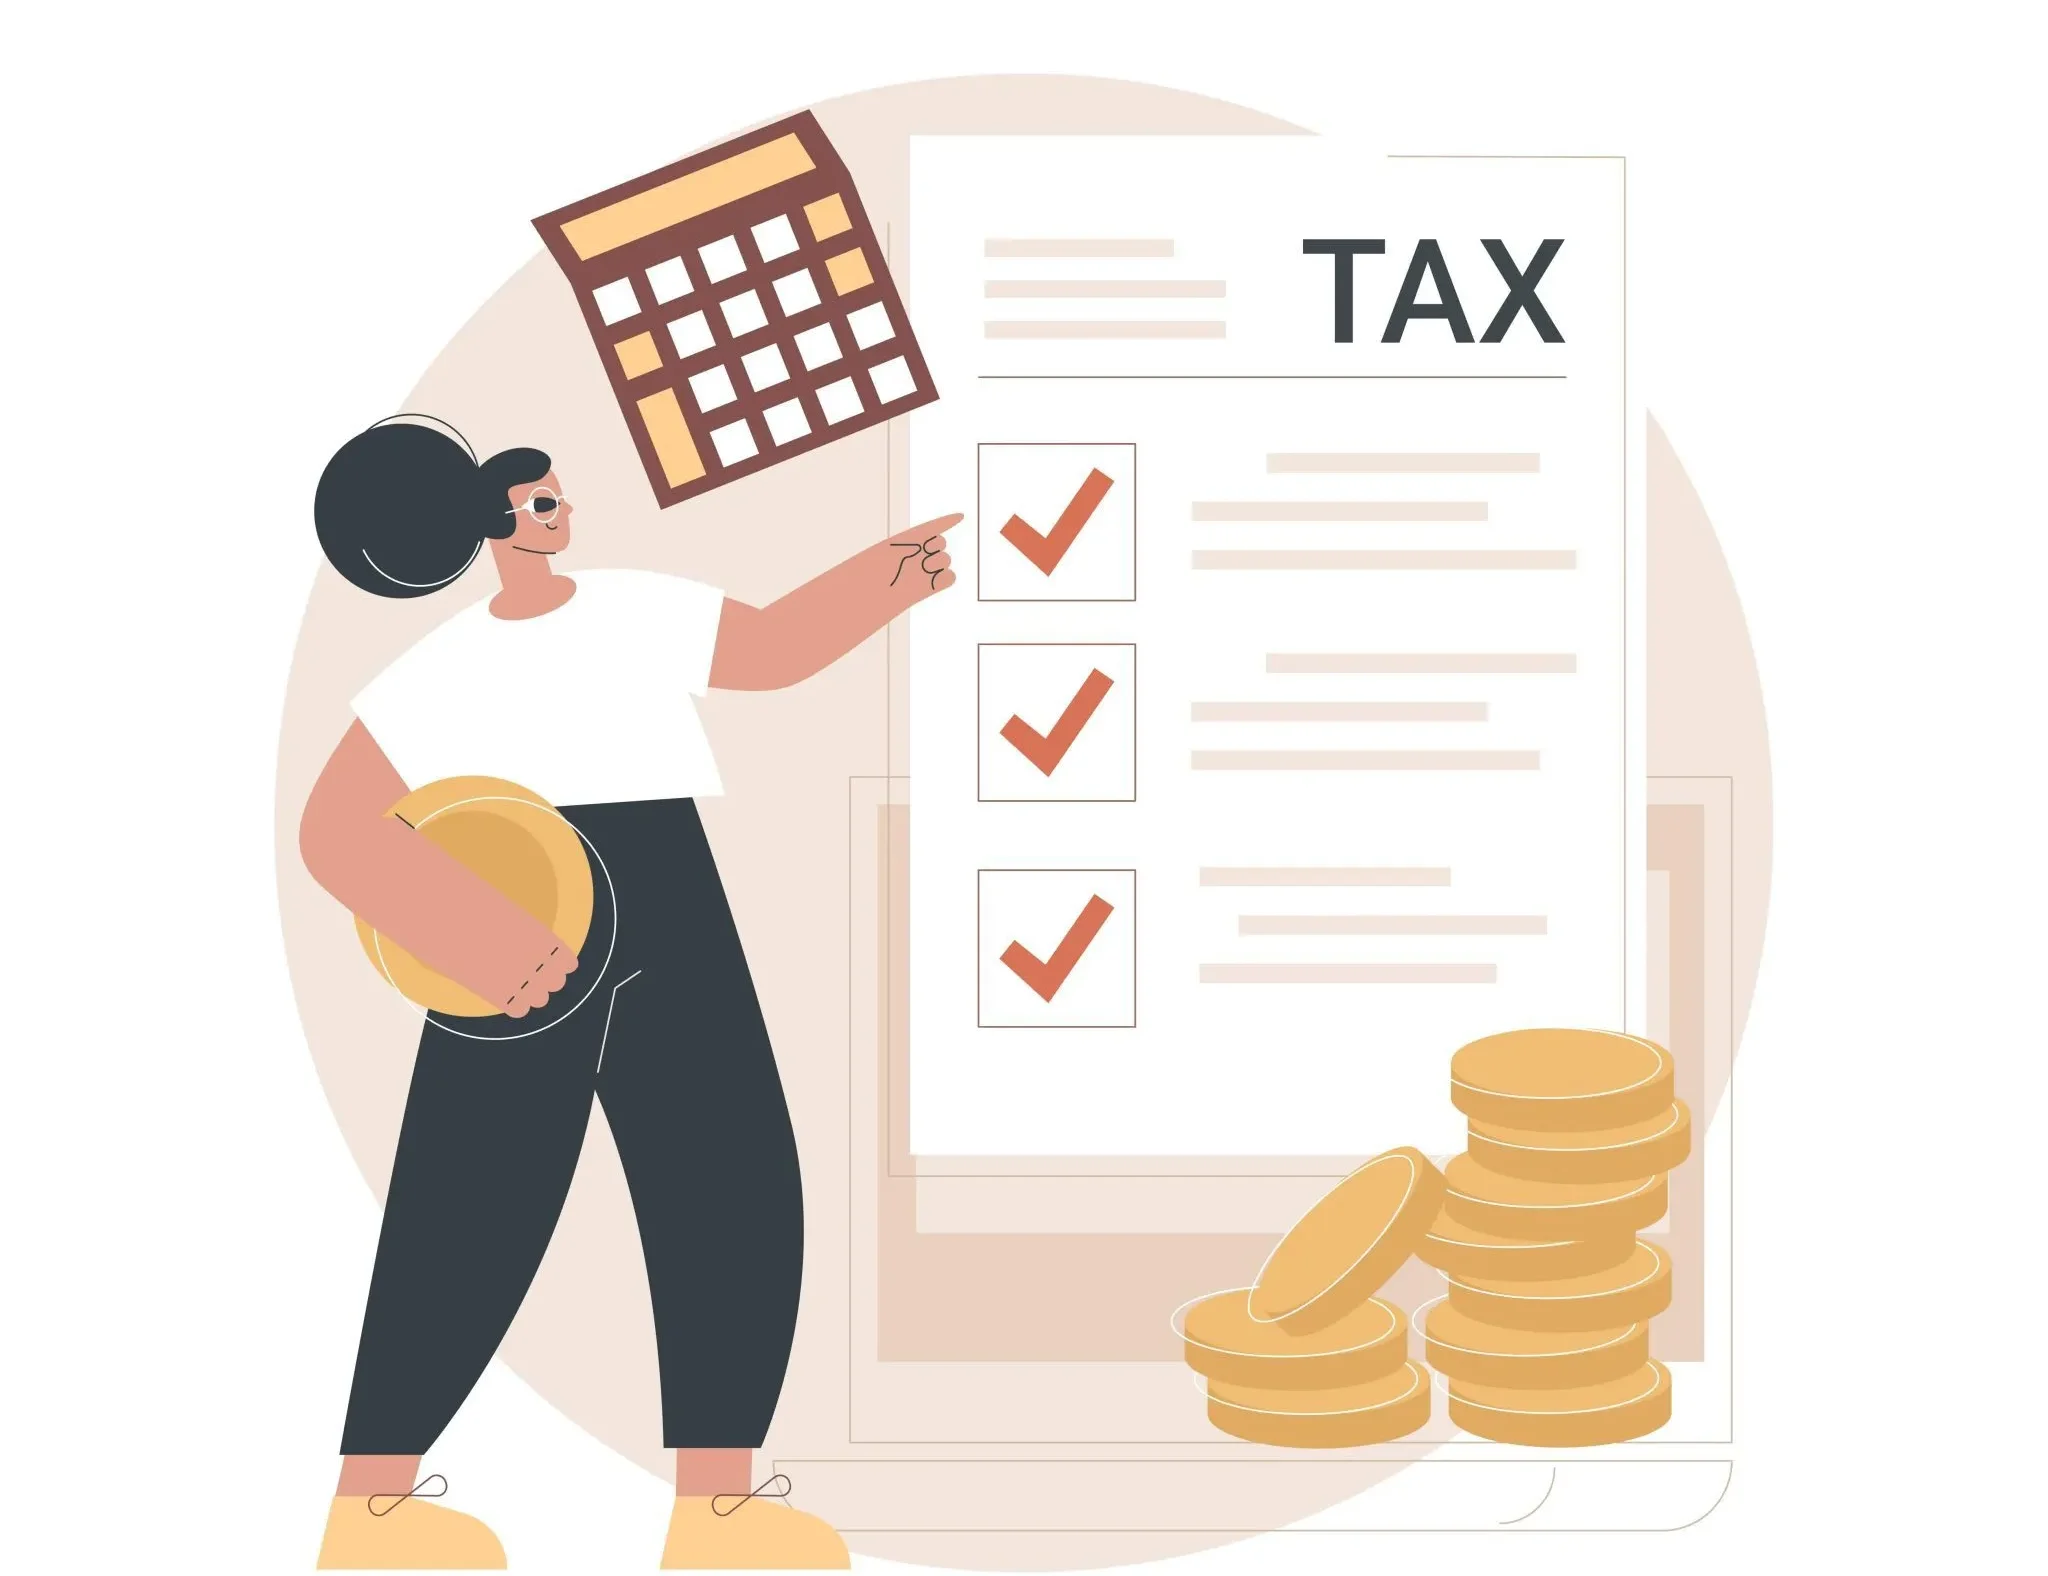 Capital Gains Tax (CGT)